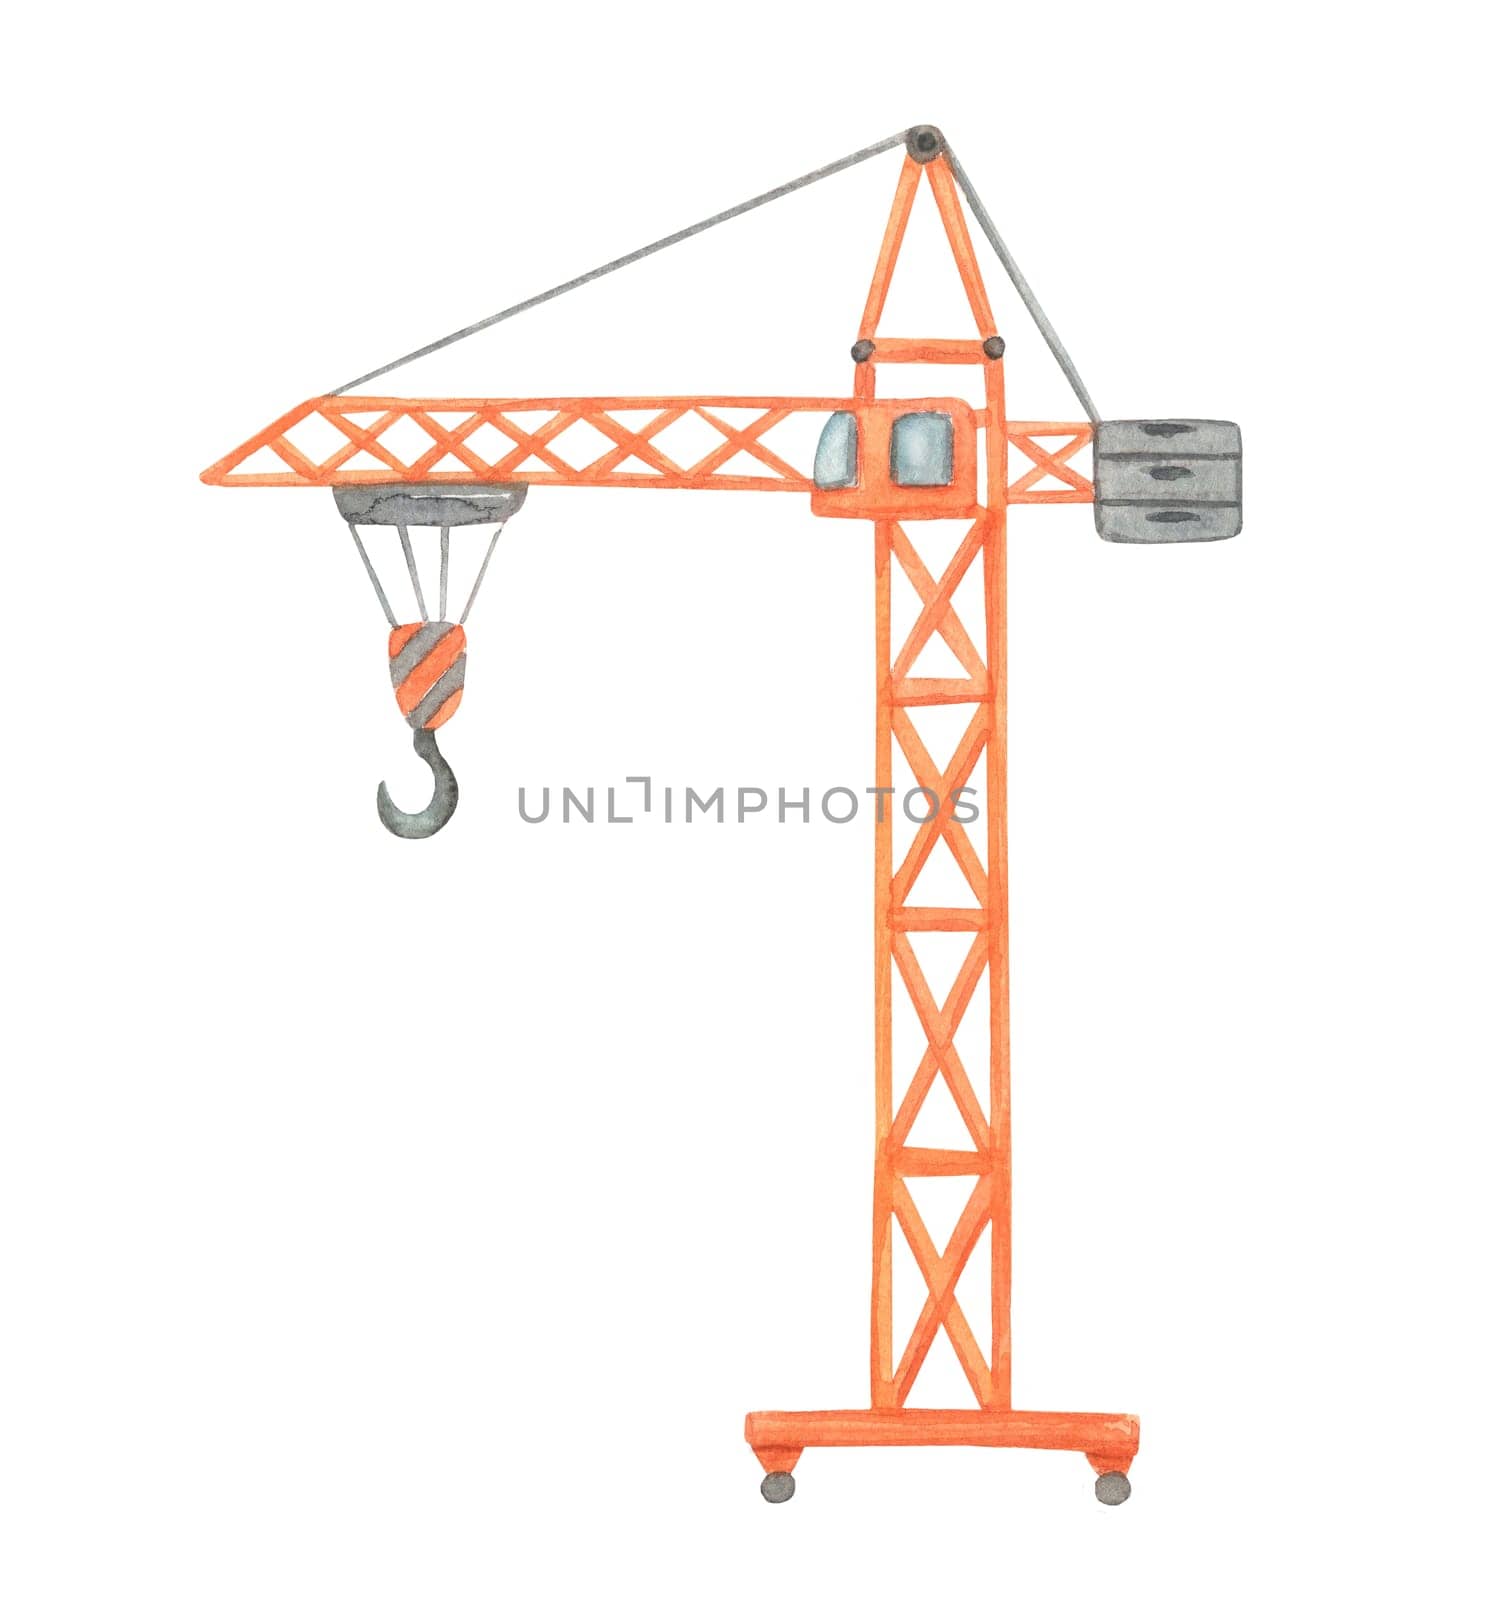 Construction crane. Watercolor illustration isolated on white. Childish cute construction vehicle by ElenaPlatova